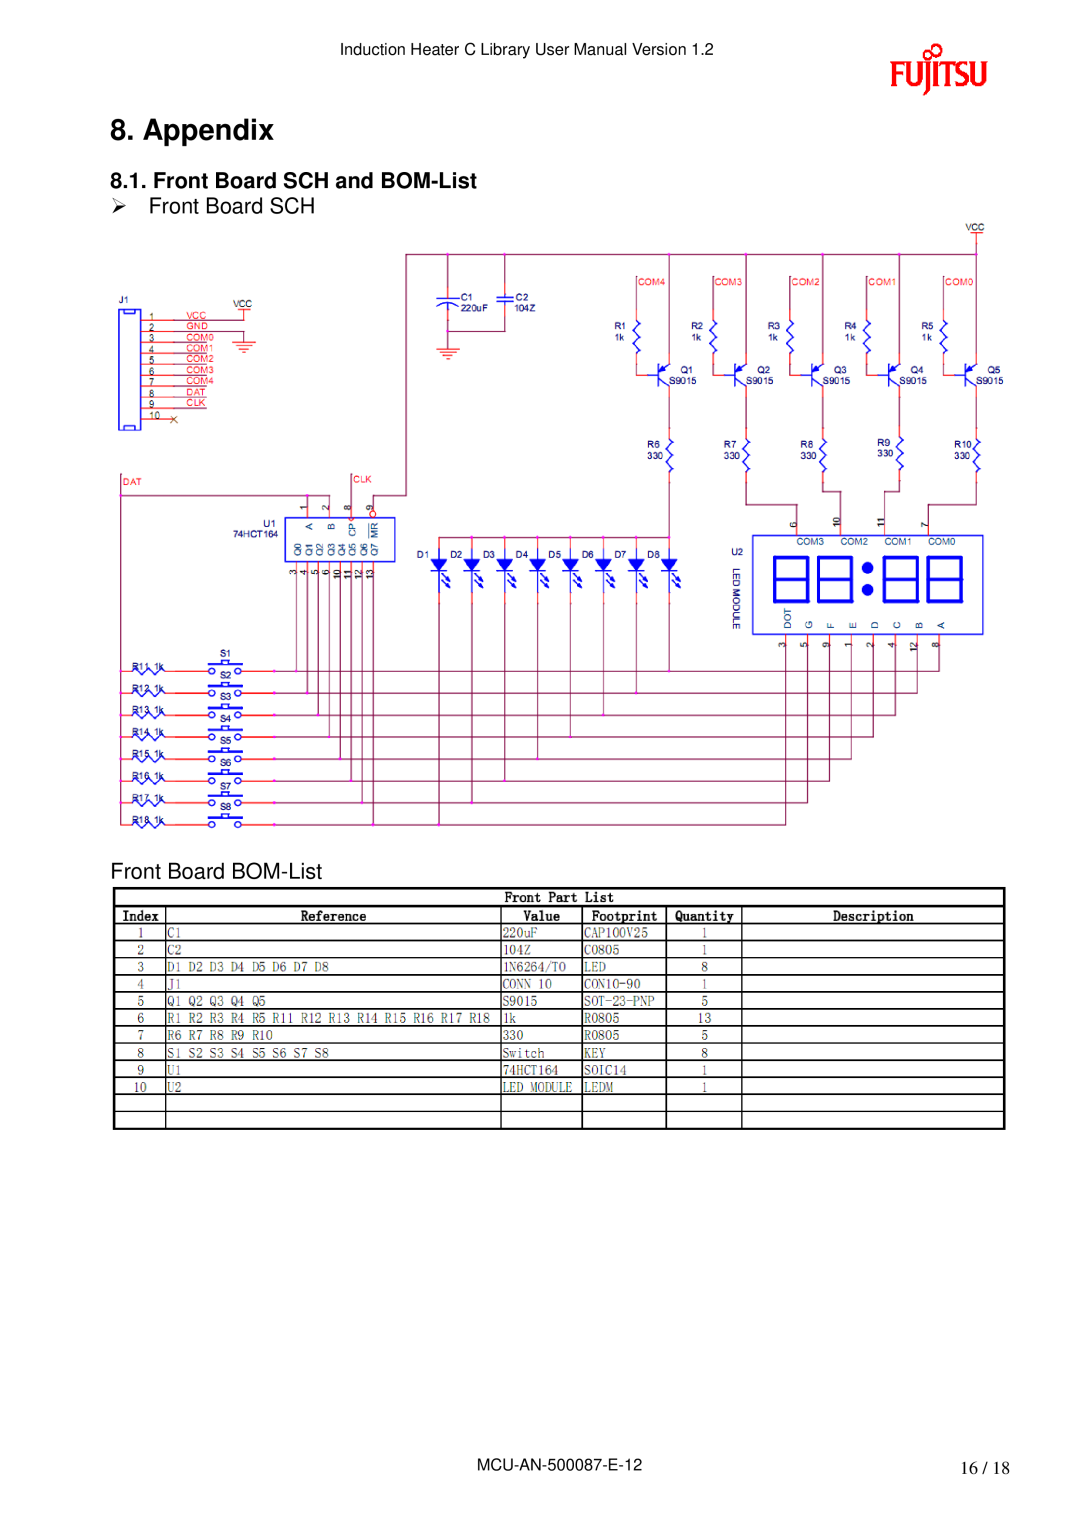 Fujitsu MB95F430 user manual Appendix, Front Board SCH and BOM-List 